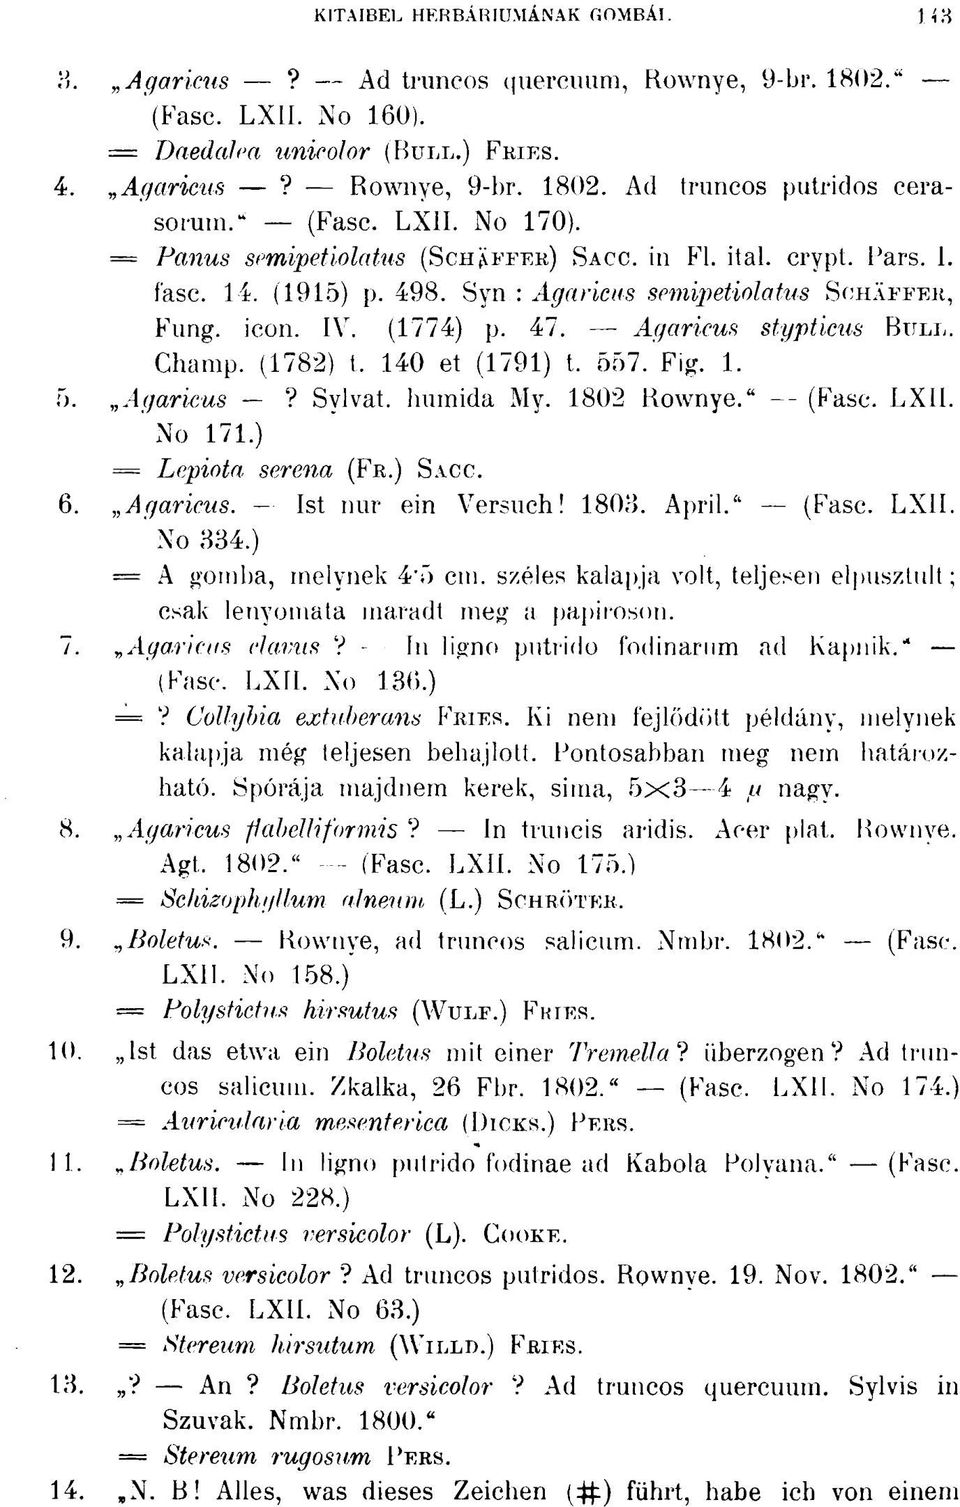 Agaricus stypticus BULL. Champ. (1782) t. 140 et (1791) t. 557. Fig. 1. 5. Agaricus? Sylvat. humida My. 1802 Bownye." (Fasc. LXll. No 171.) = Lepiota serena (FR.) SACC. 6. Agaricus. Ist nur ein Versuch!